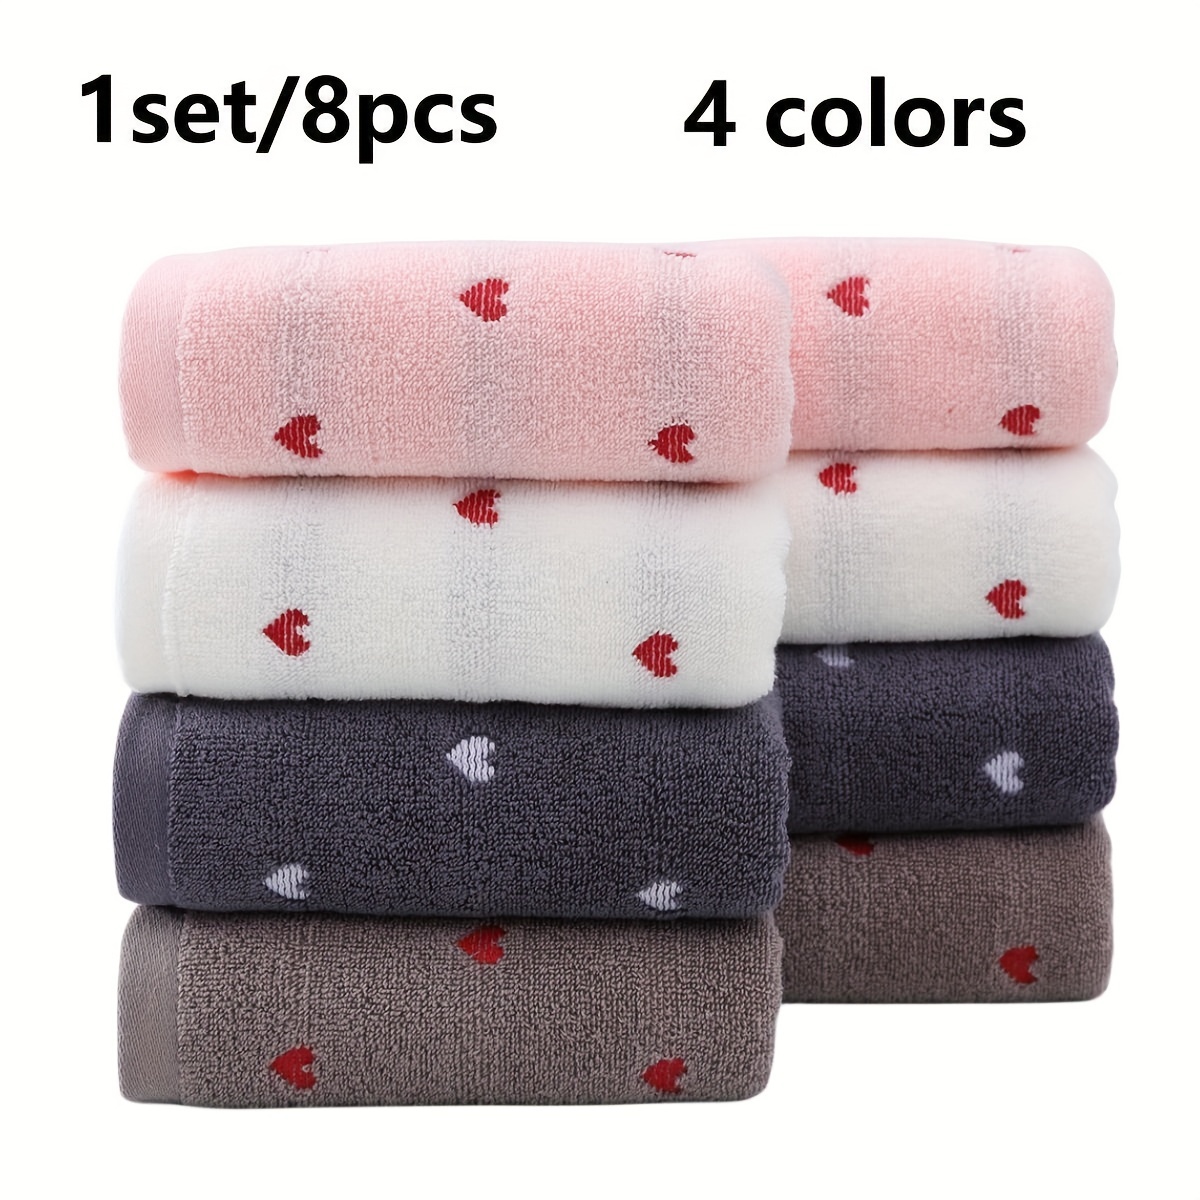 

8pcs Cotton Hand Towel Set, Thickened & Absorbent Face Towel, Super Soft Hand Towel, For Home & Bathroom, Ideal Bathroom Essentials